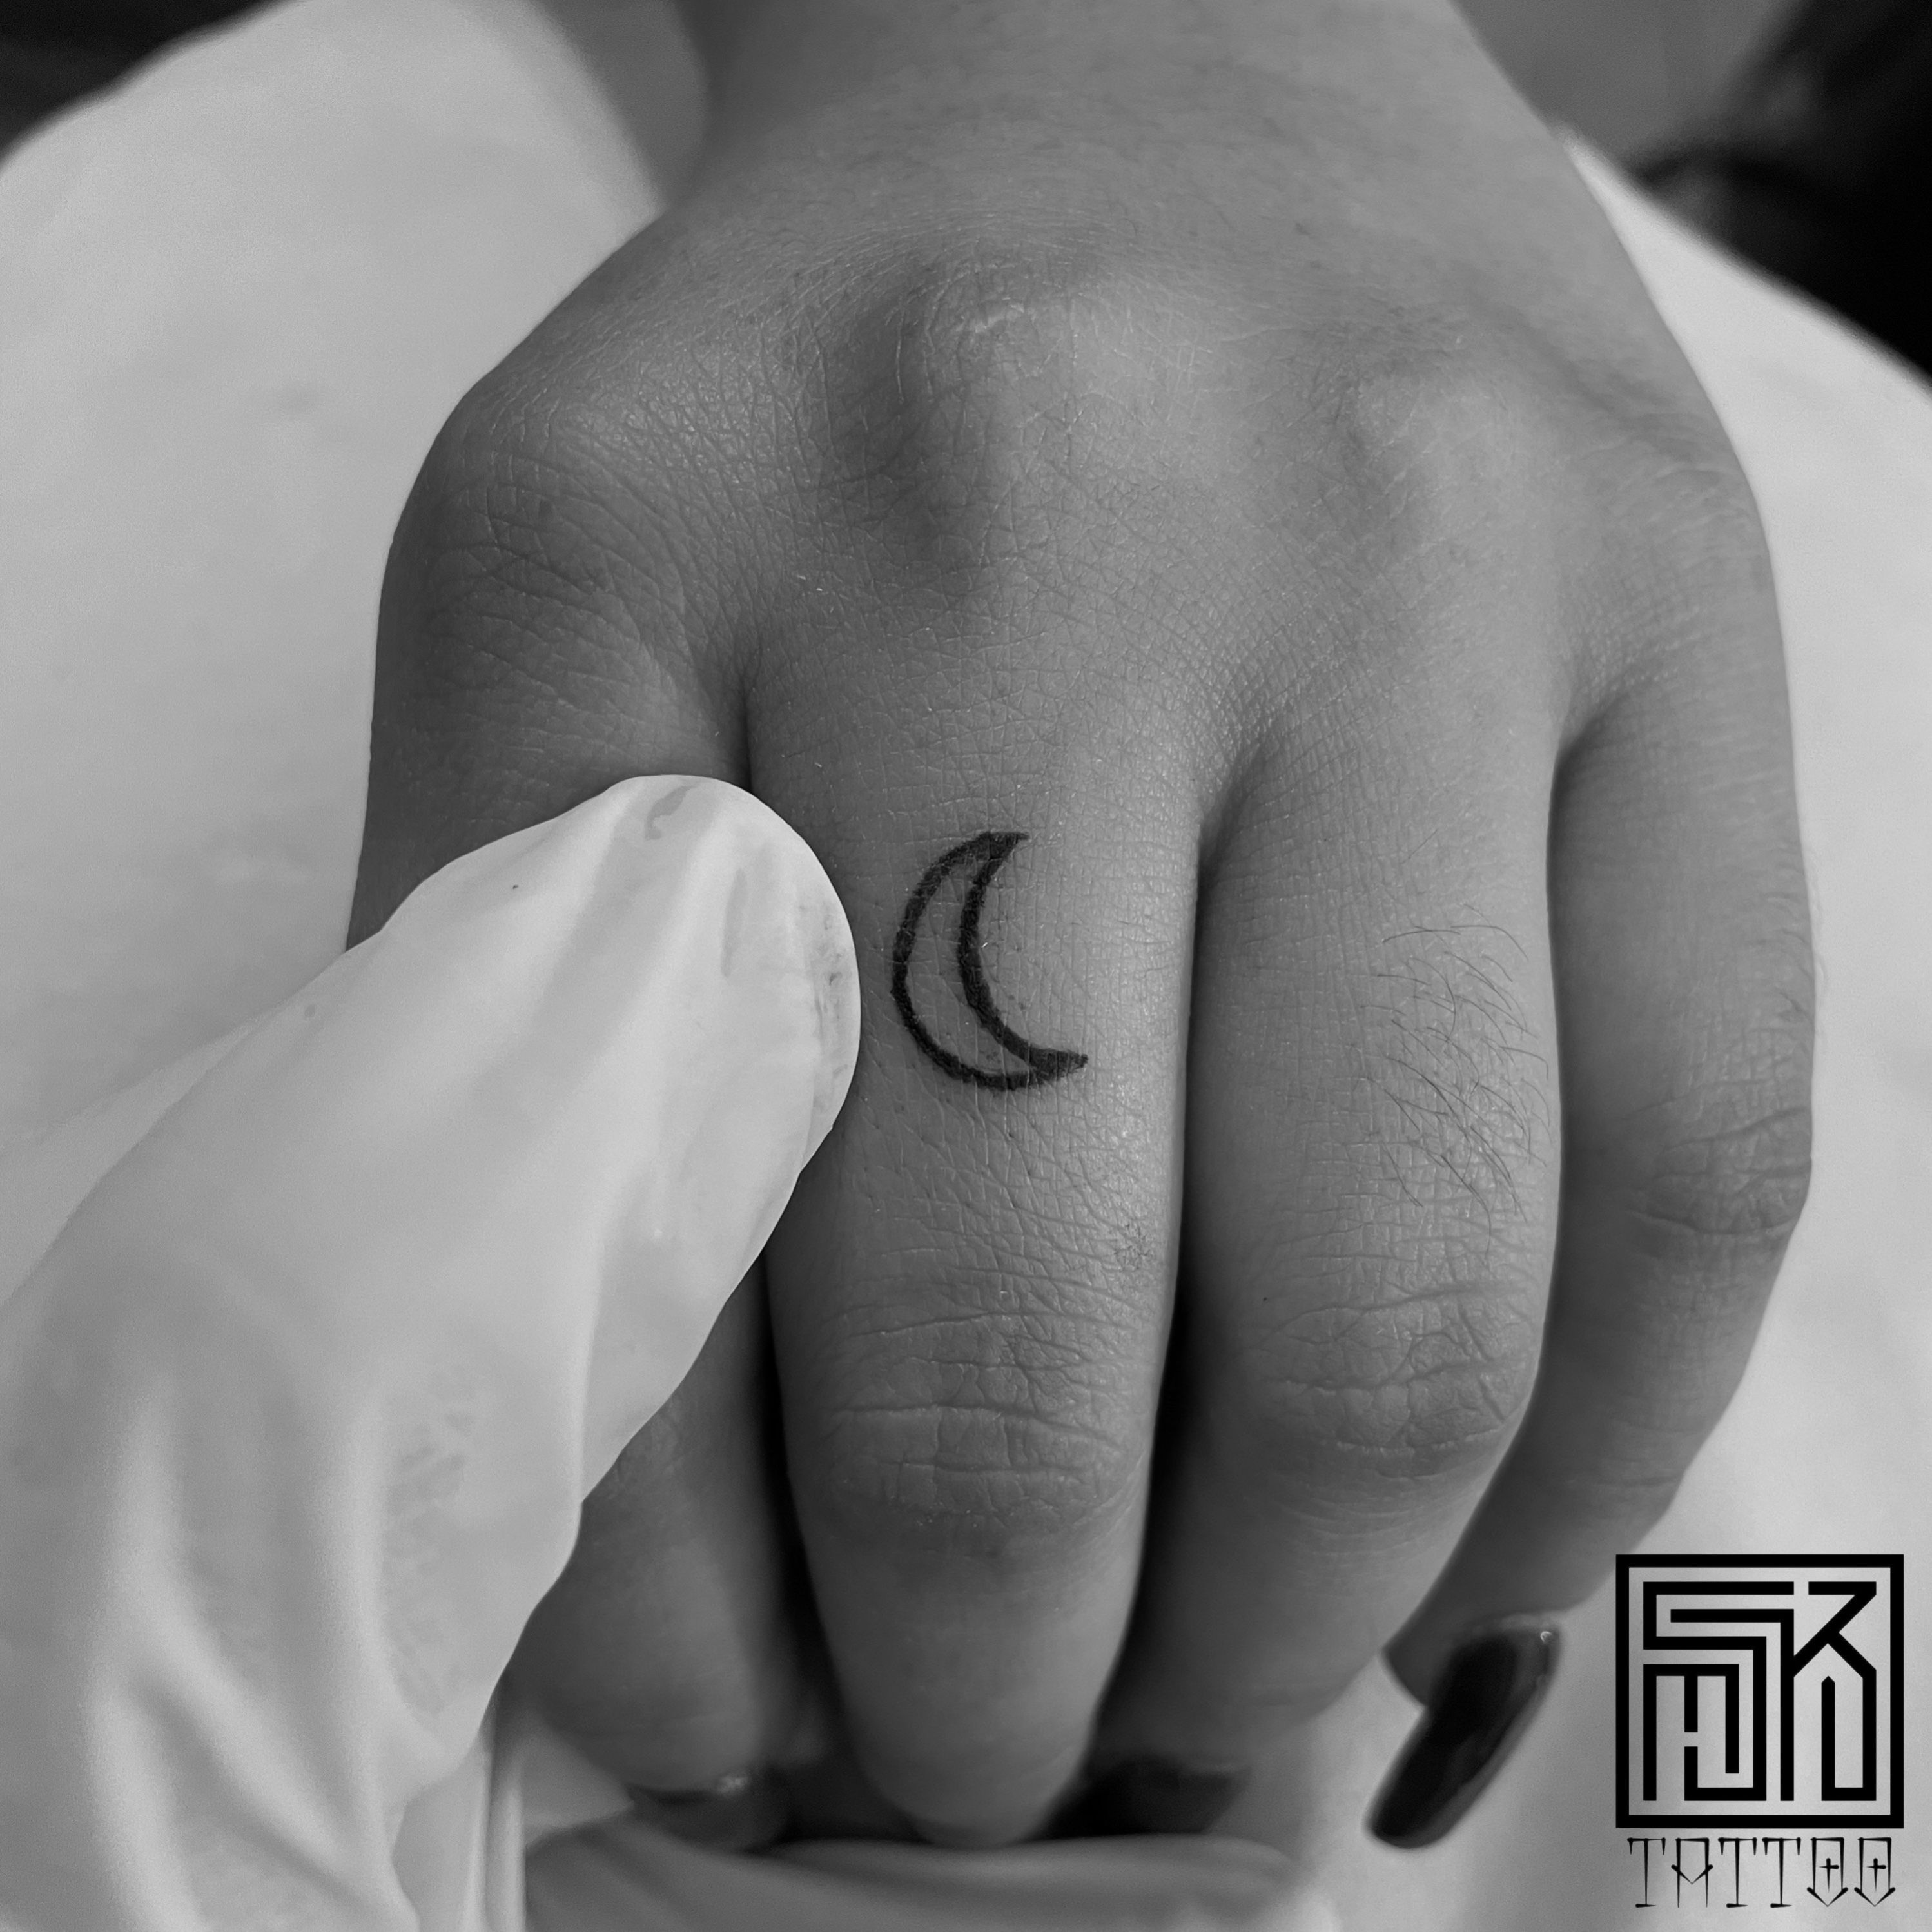 crescent moon tattoo finger